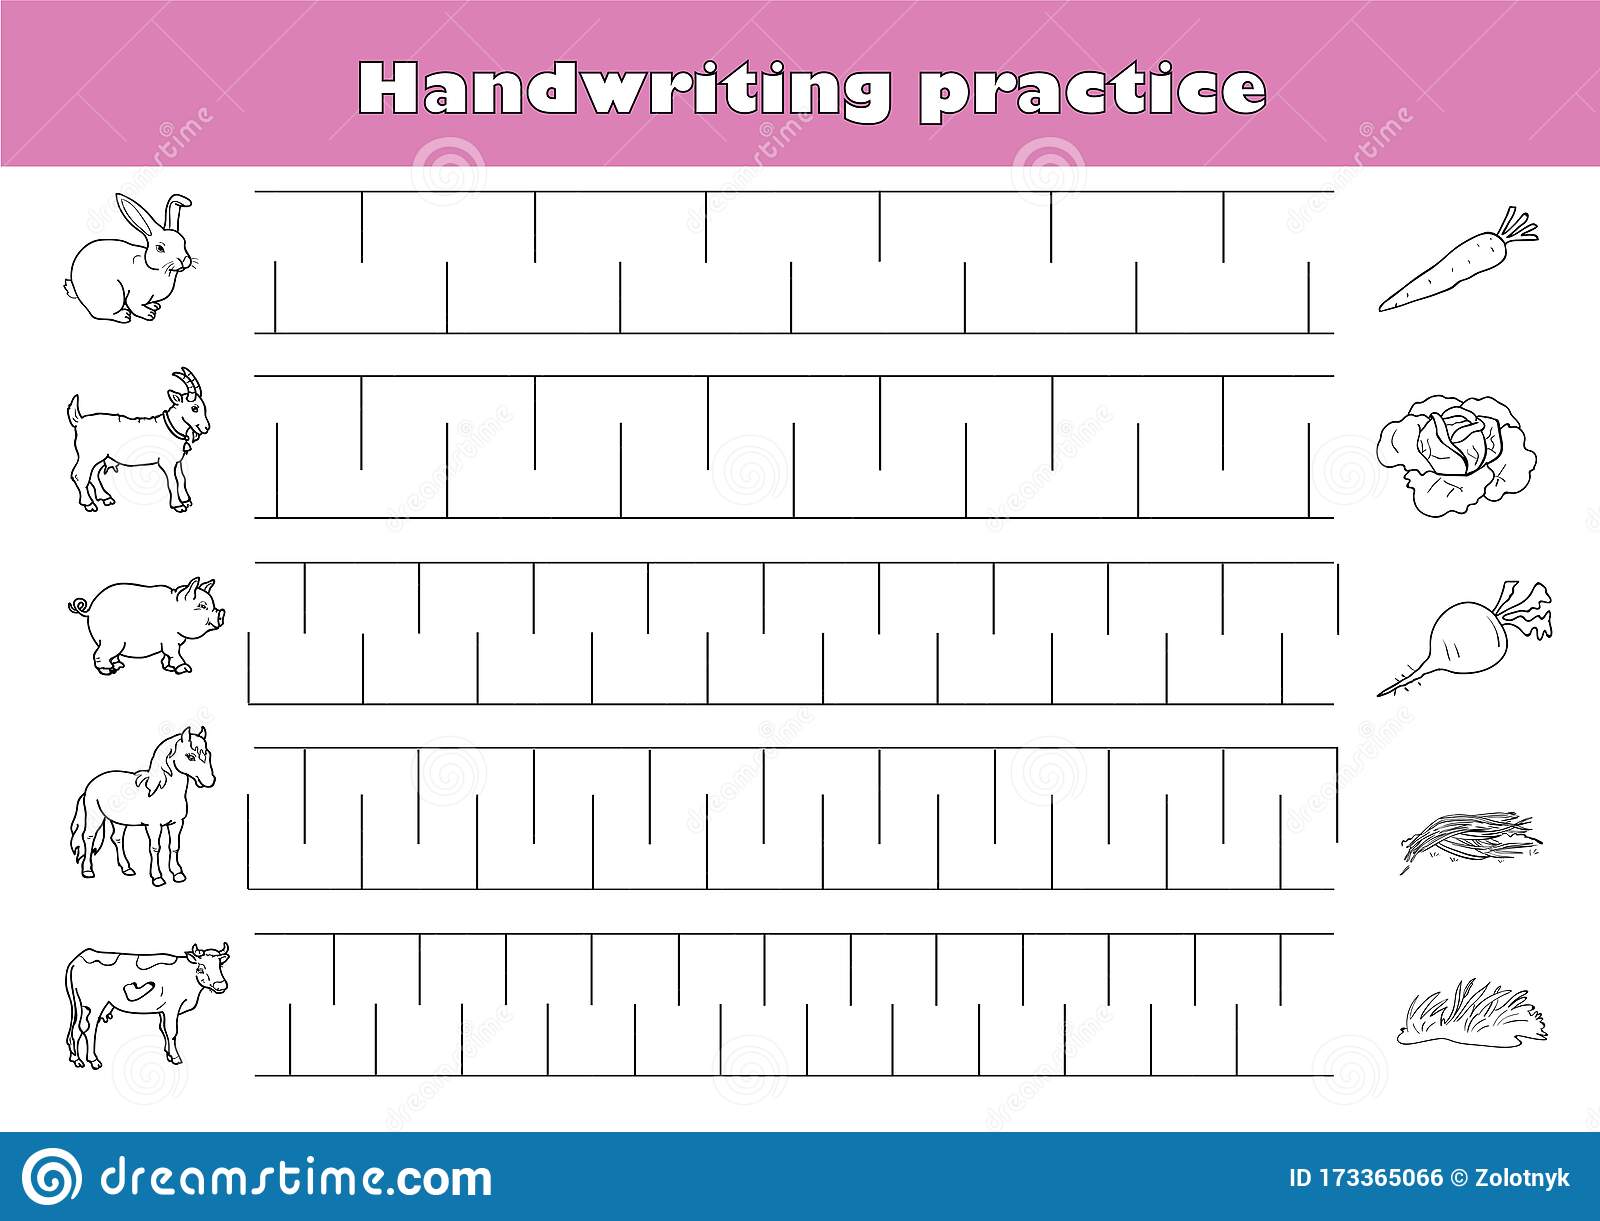 Handwriting Practice Sheet Educational Children Game Restore The